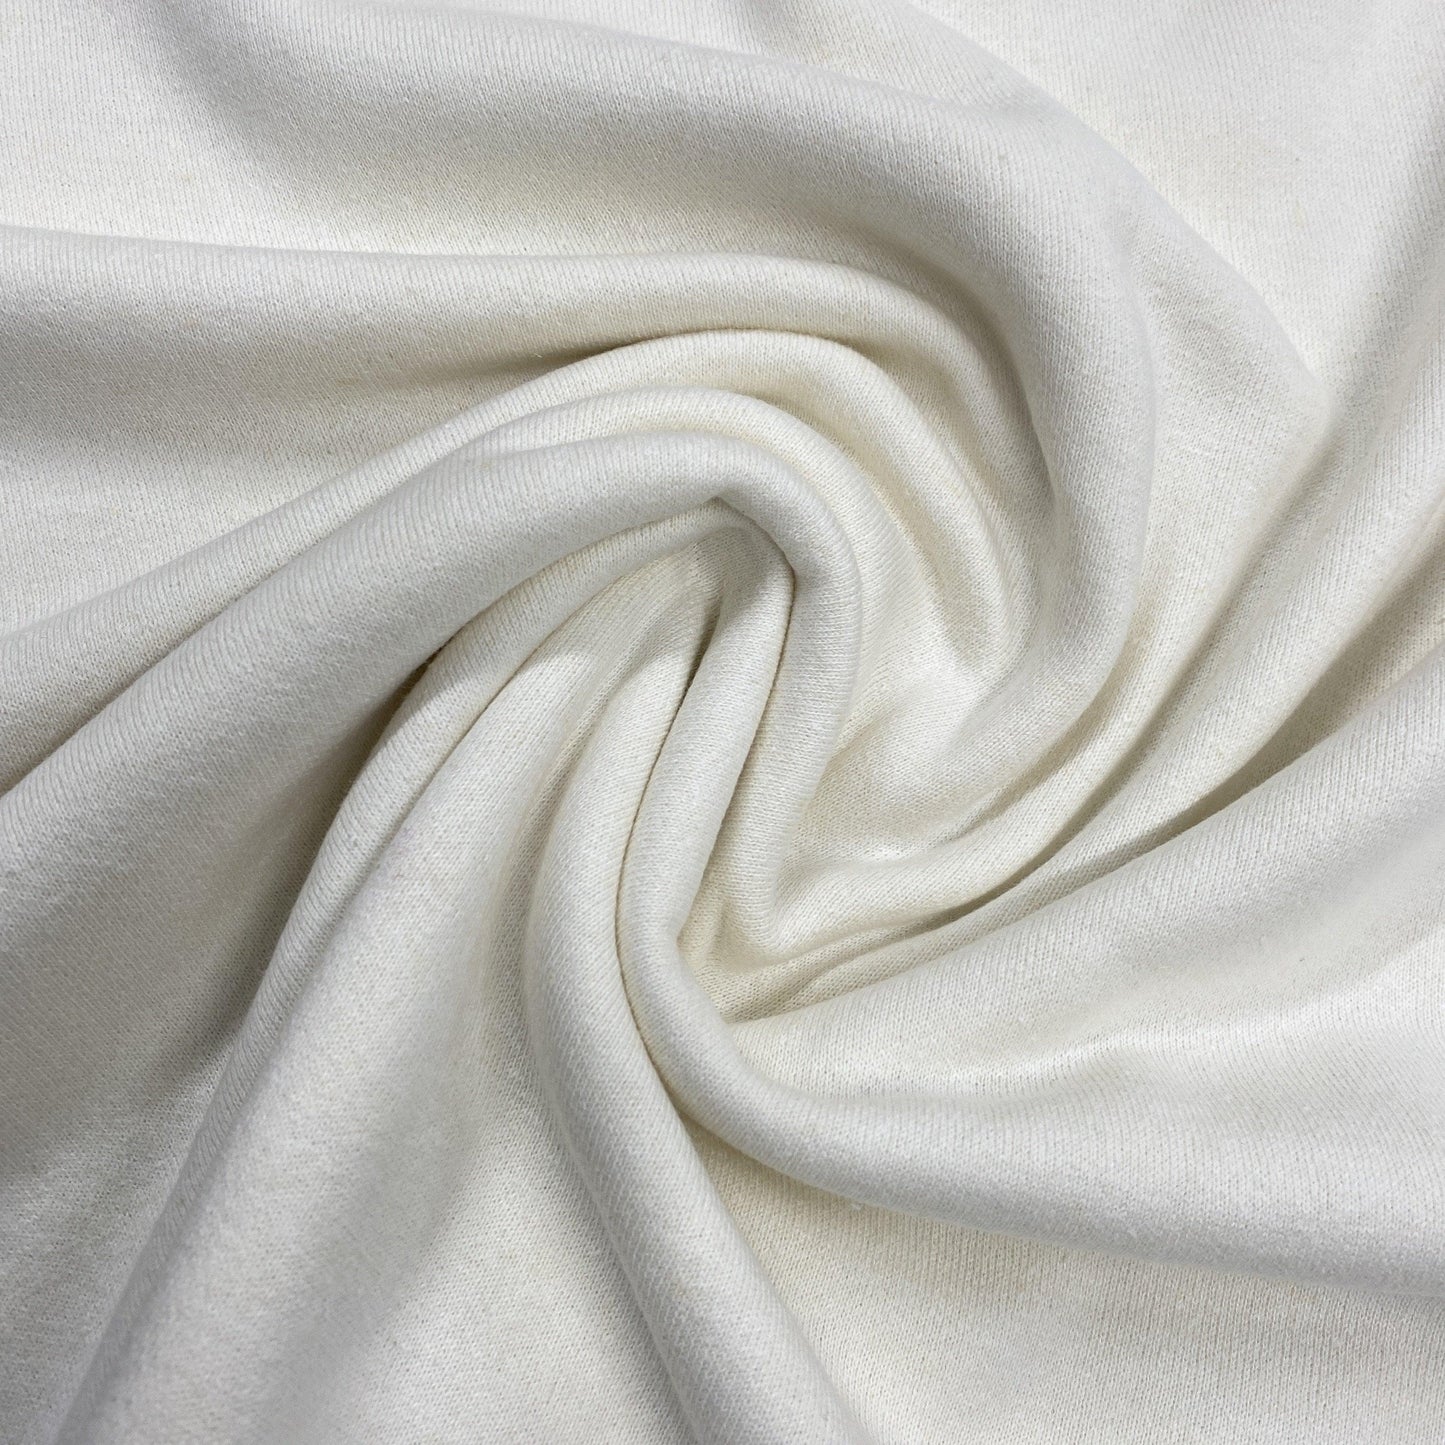 Hemp Cotton Fleece Fabric - 370 GSM, $10.23/yd - Rolls - Nature's Fabrics